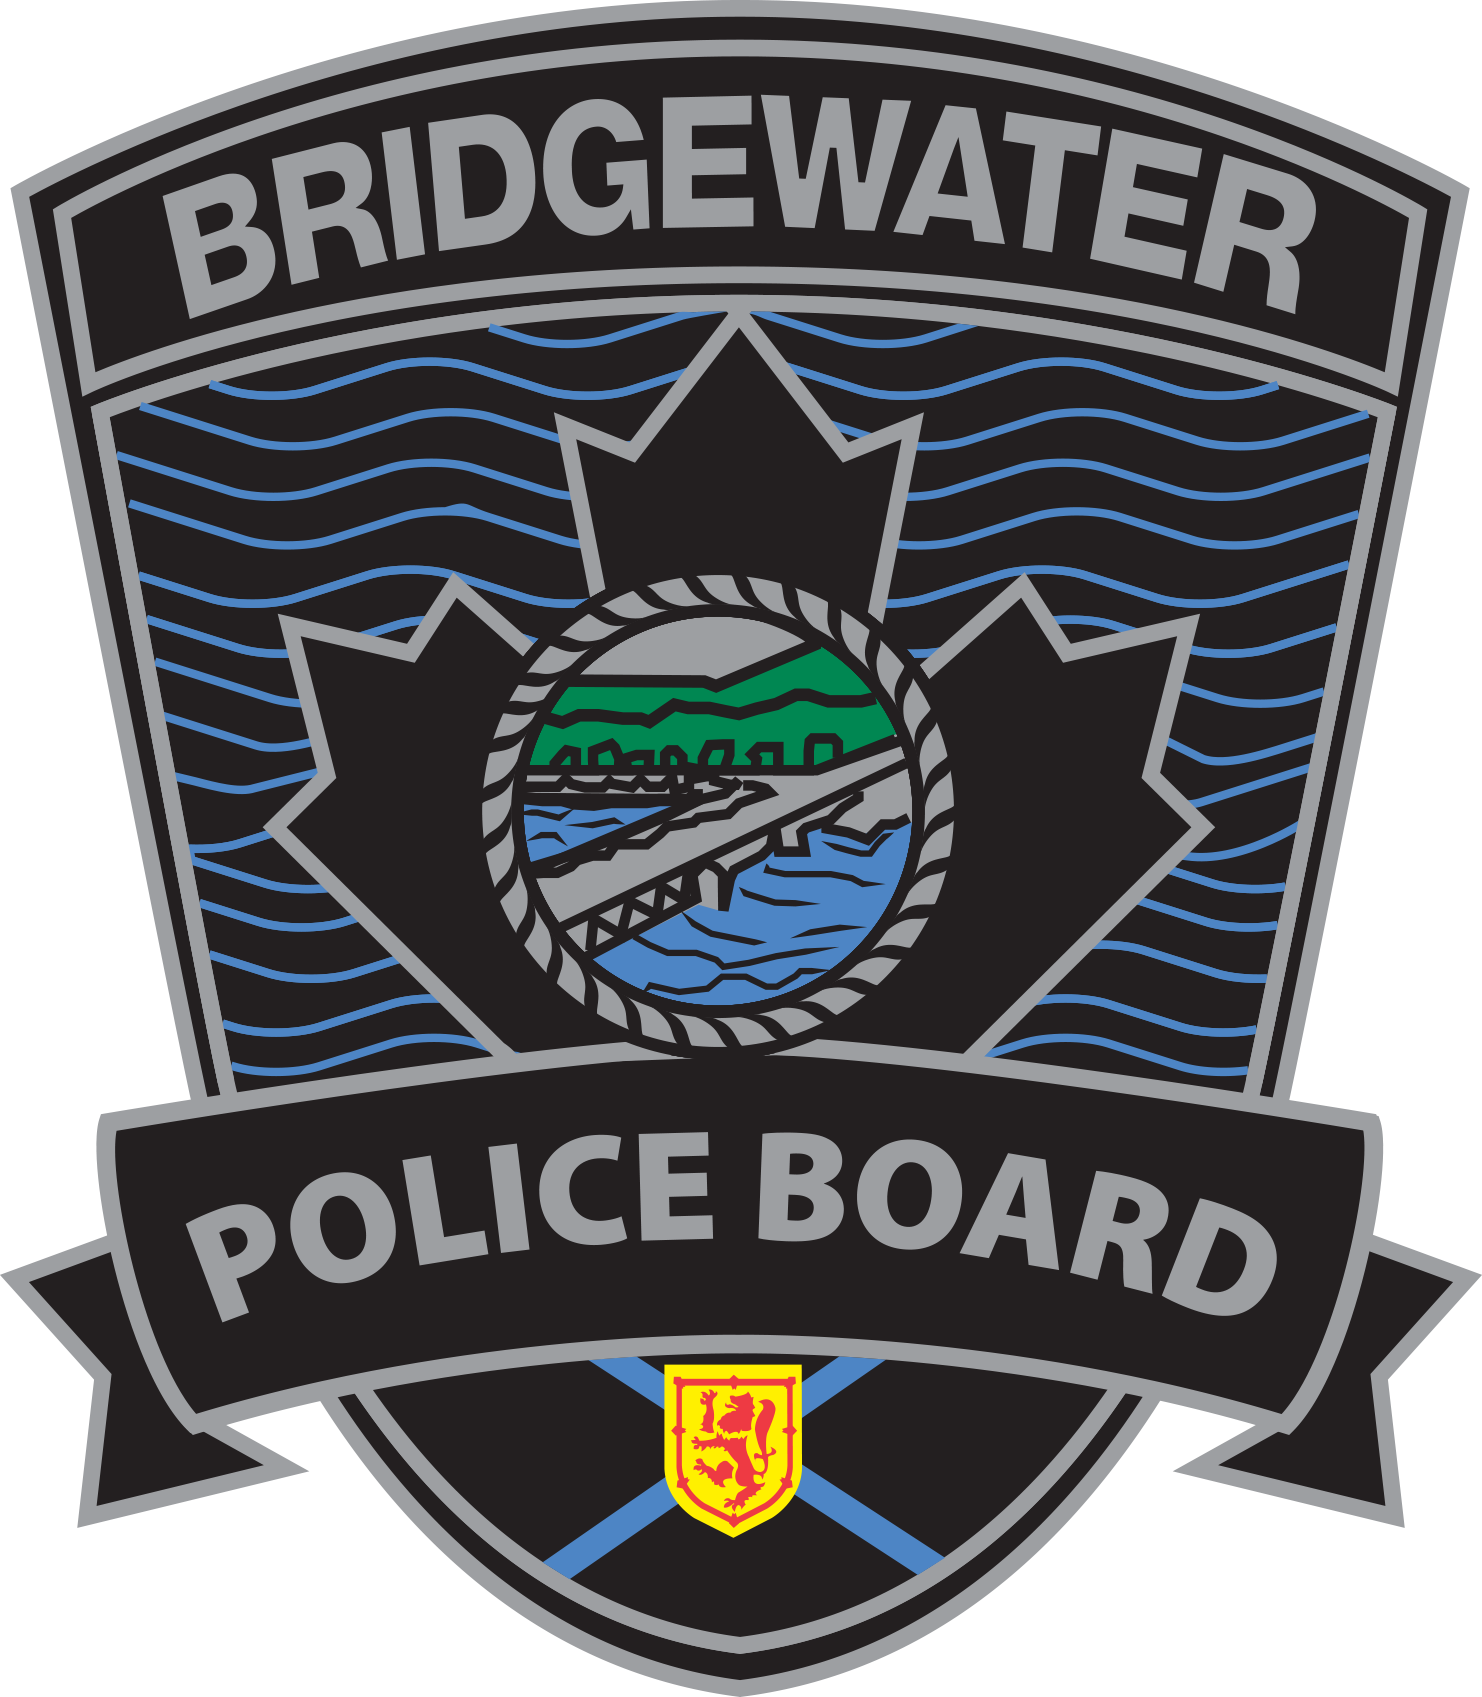 Bridgewater Police Board Crest color Converted